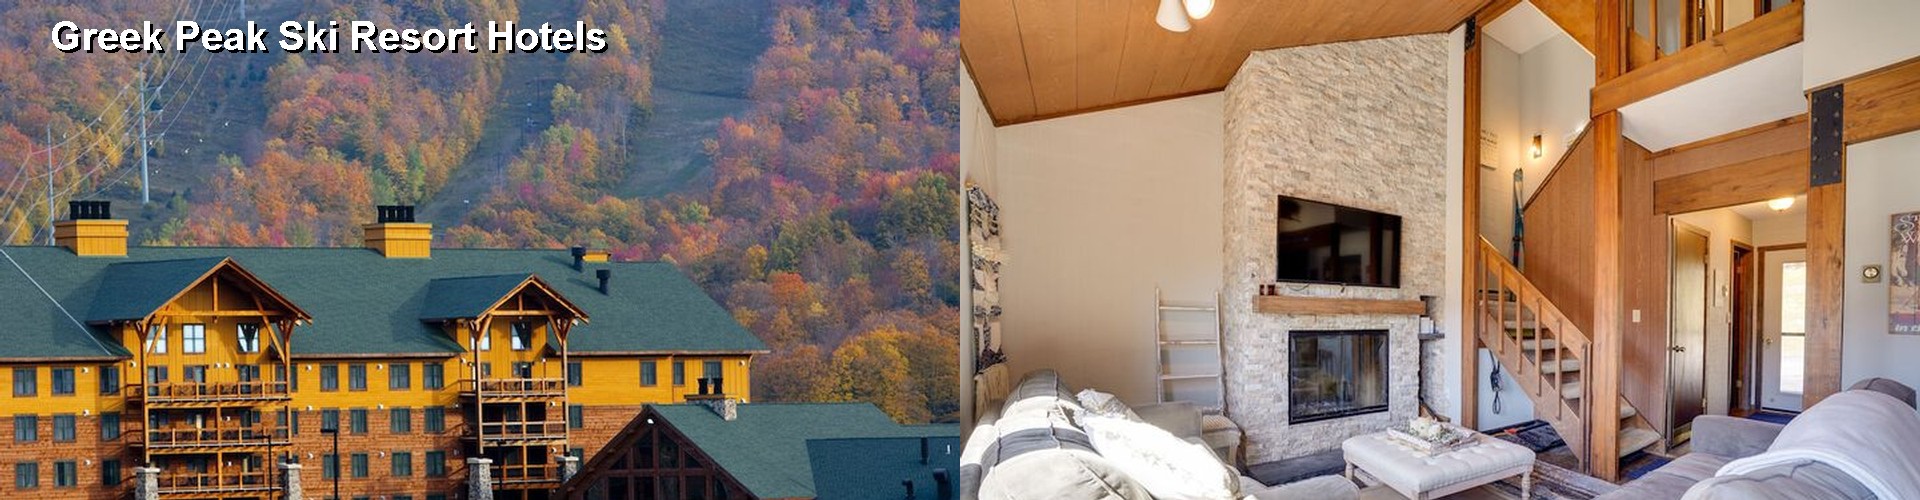 5 Best Hotels near Greek Peak Ski Resort